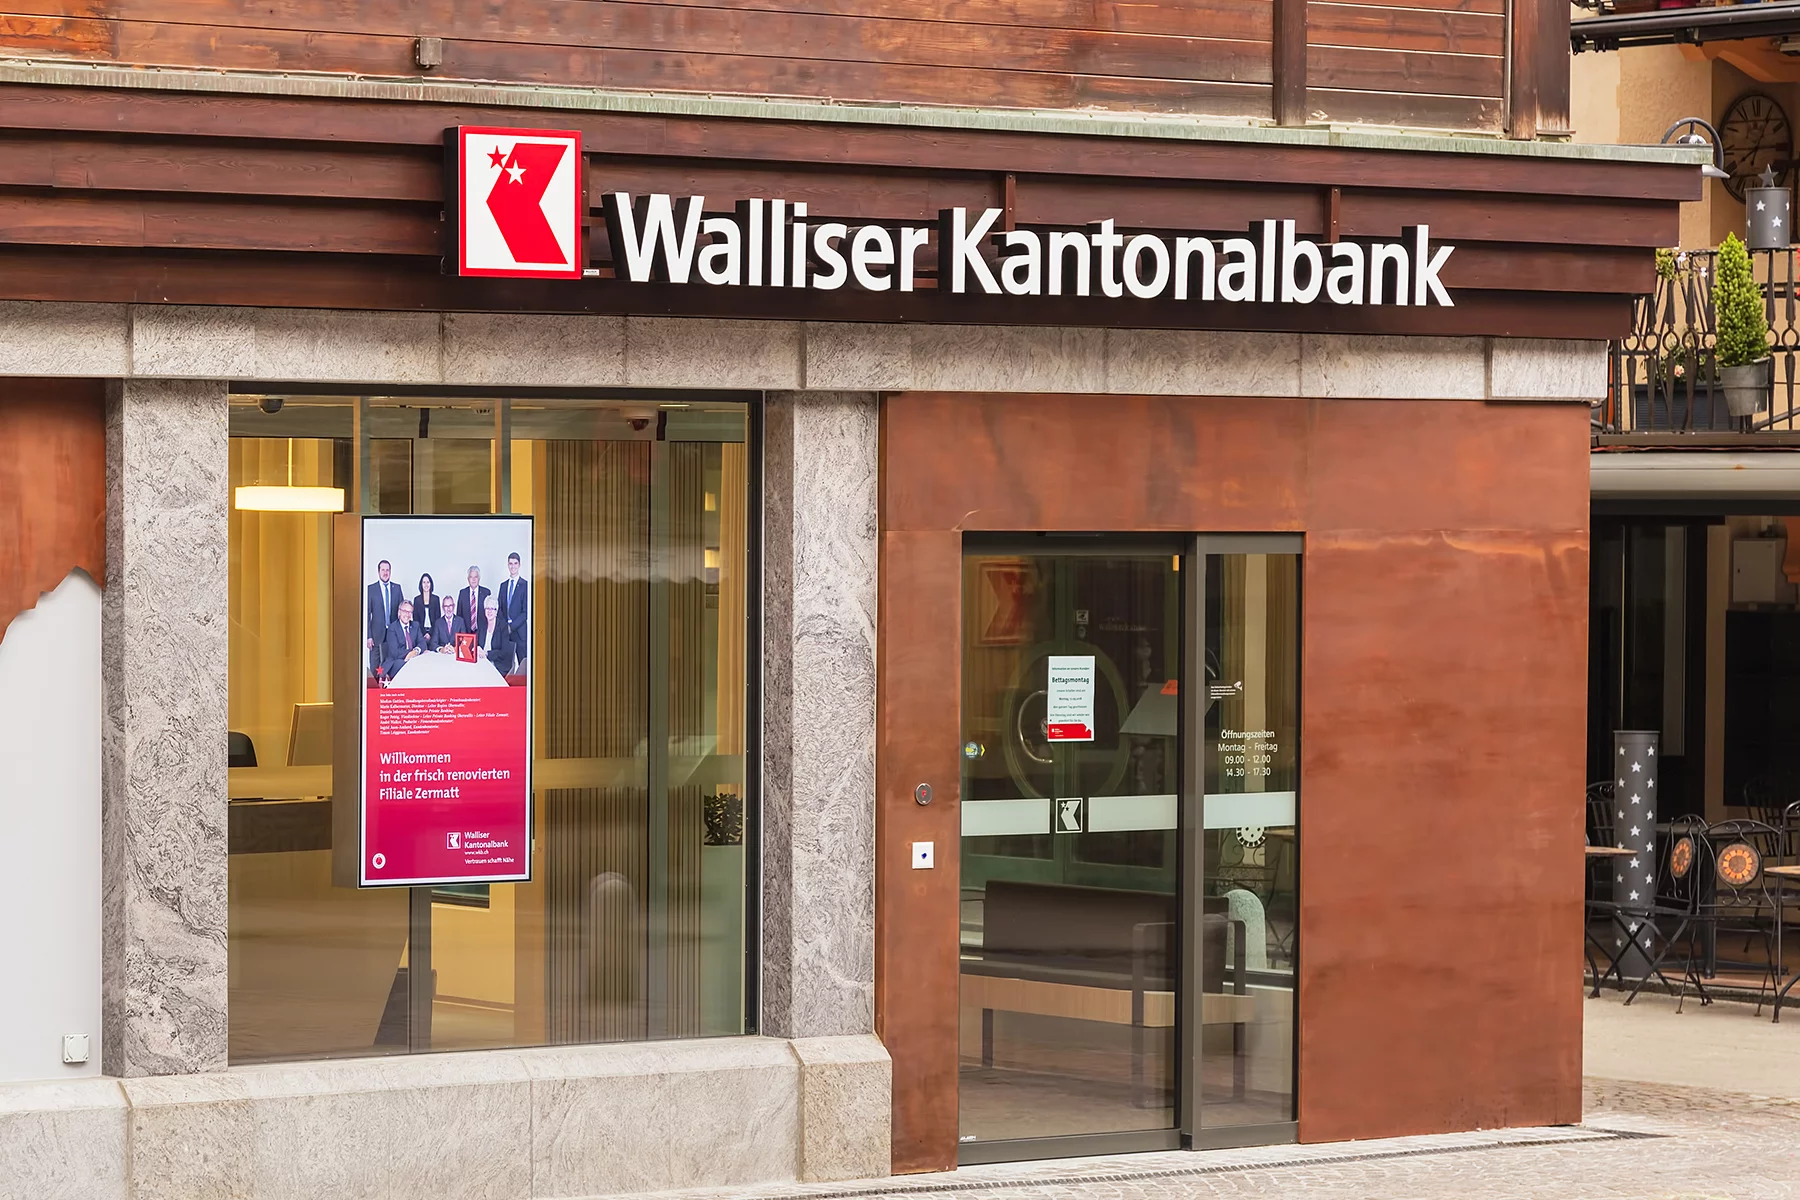 Walliser Kantonalbank branch in Zermatt